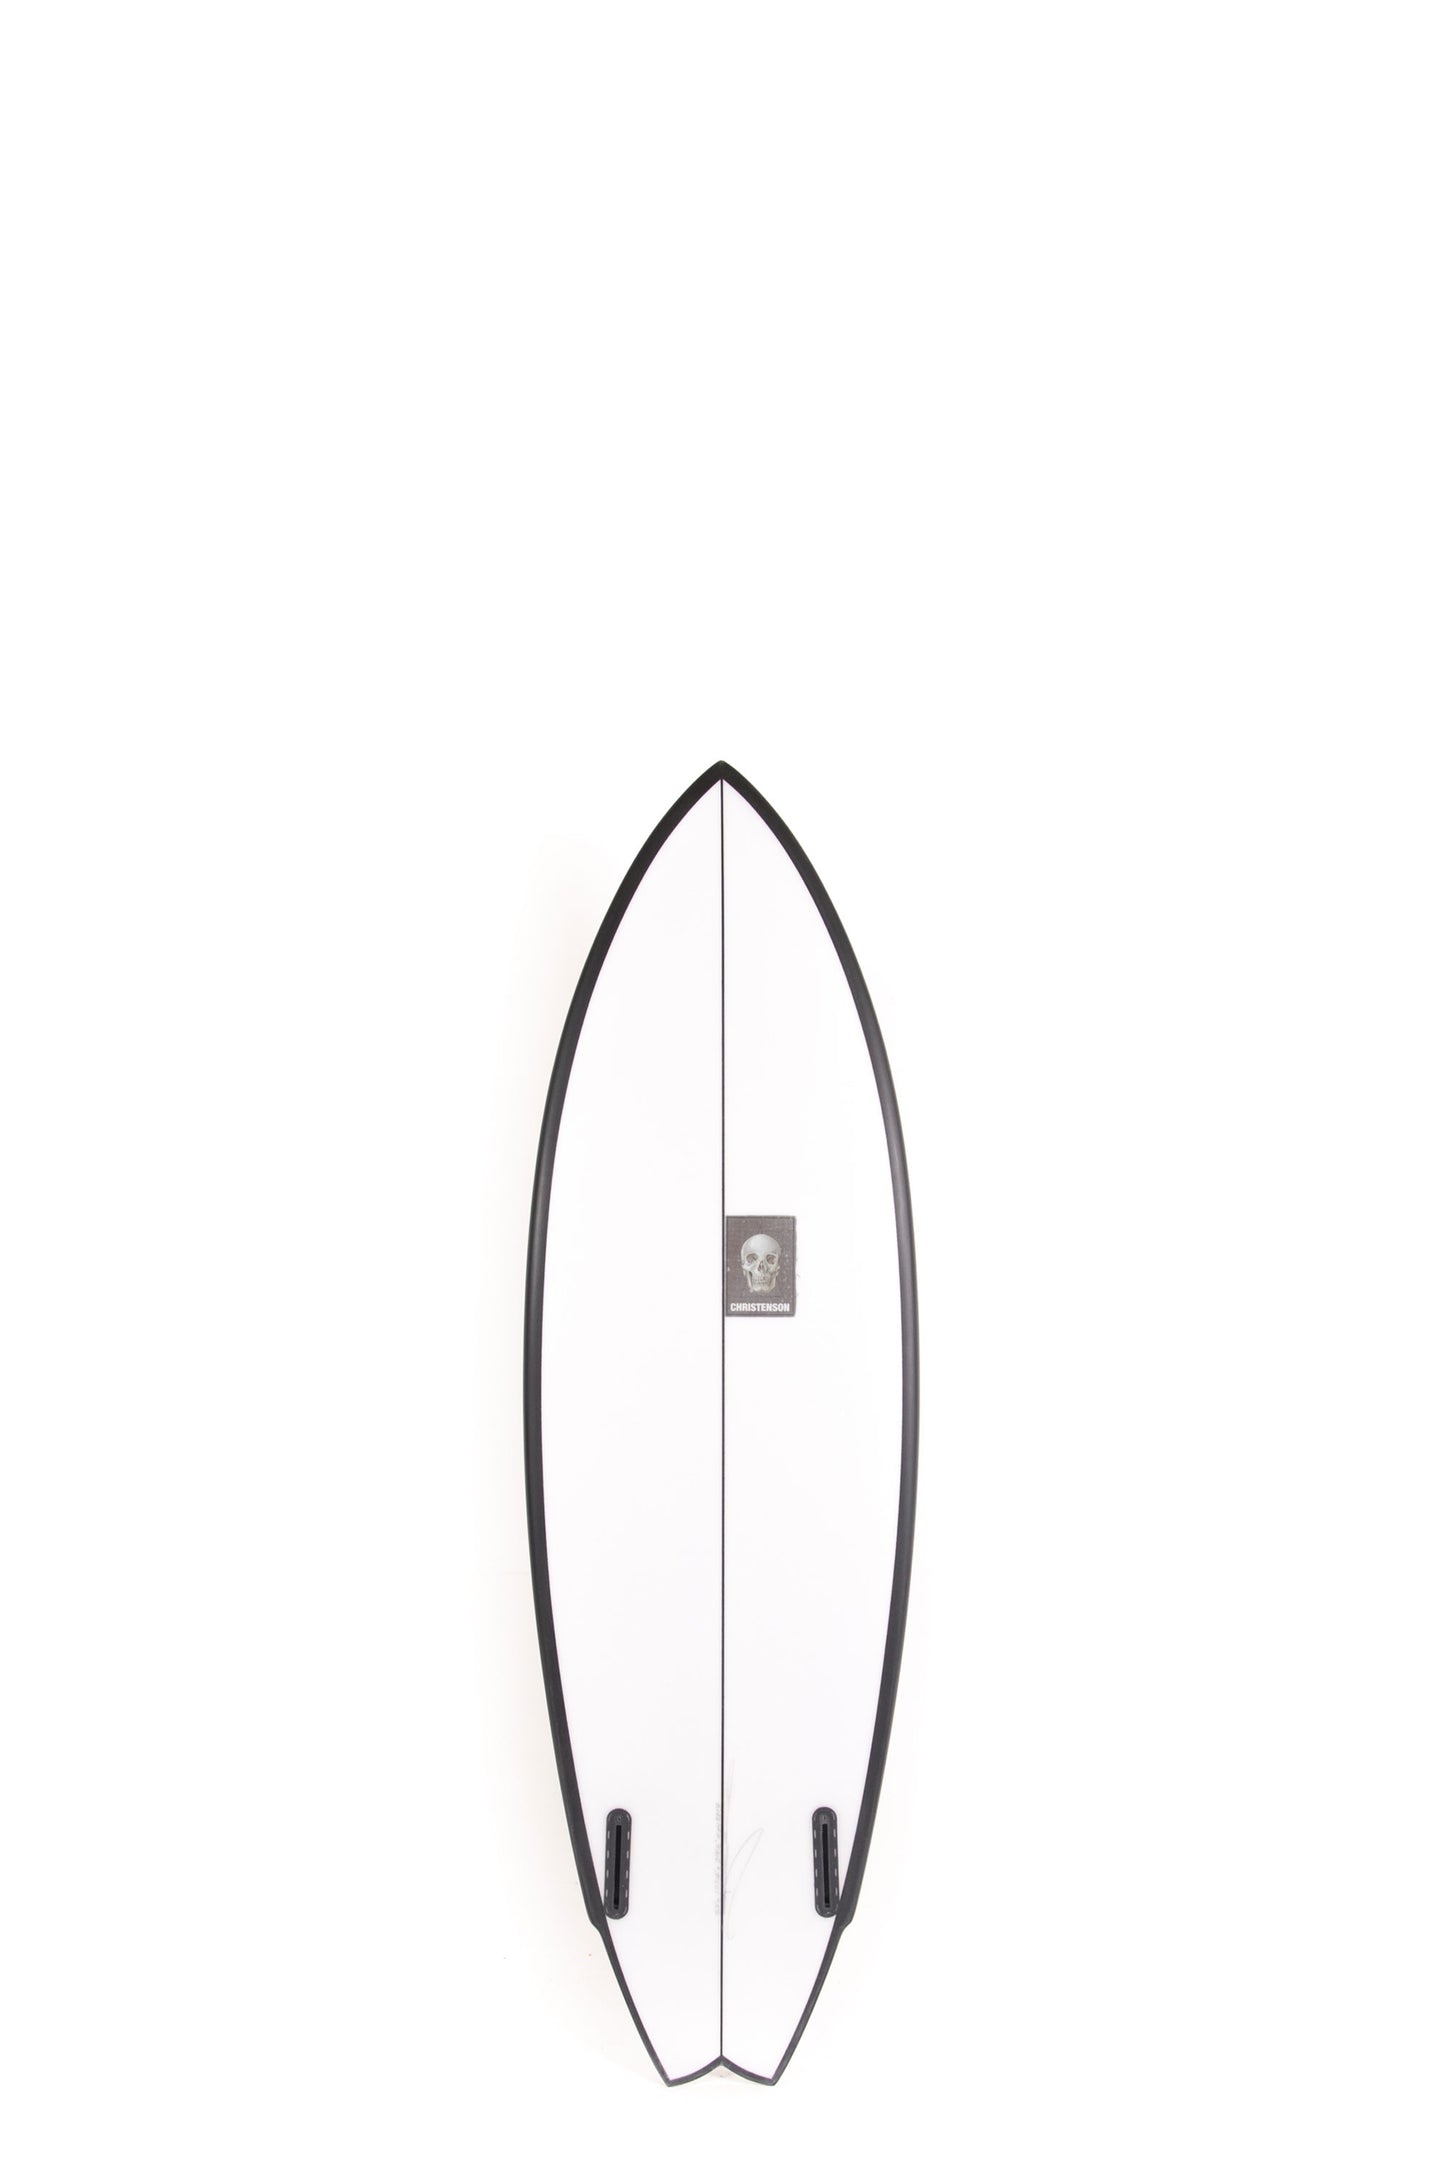 Pukas Surf Shop - Christenson Surfboards - LANE SPLITTER SWALLOW - 5'8" x 19 3/4 x 2 9/16 x 31,12L - CX05817